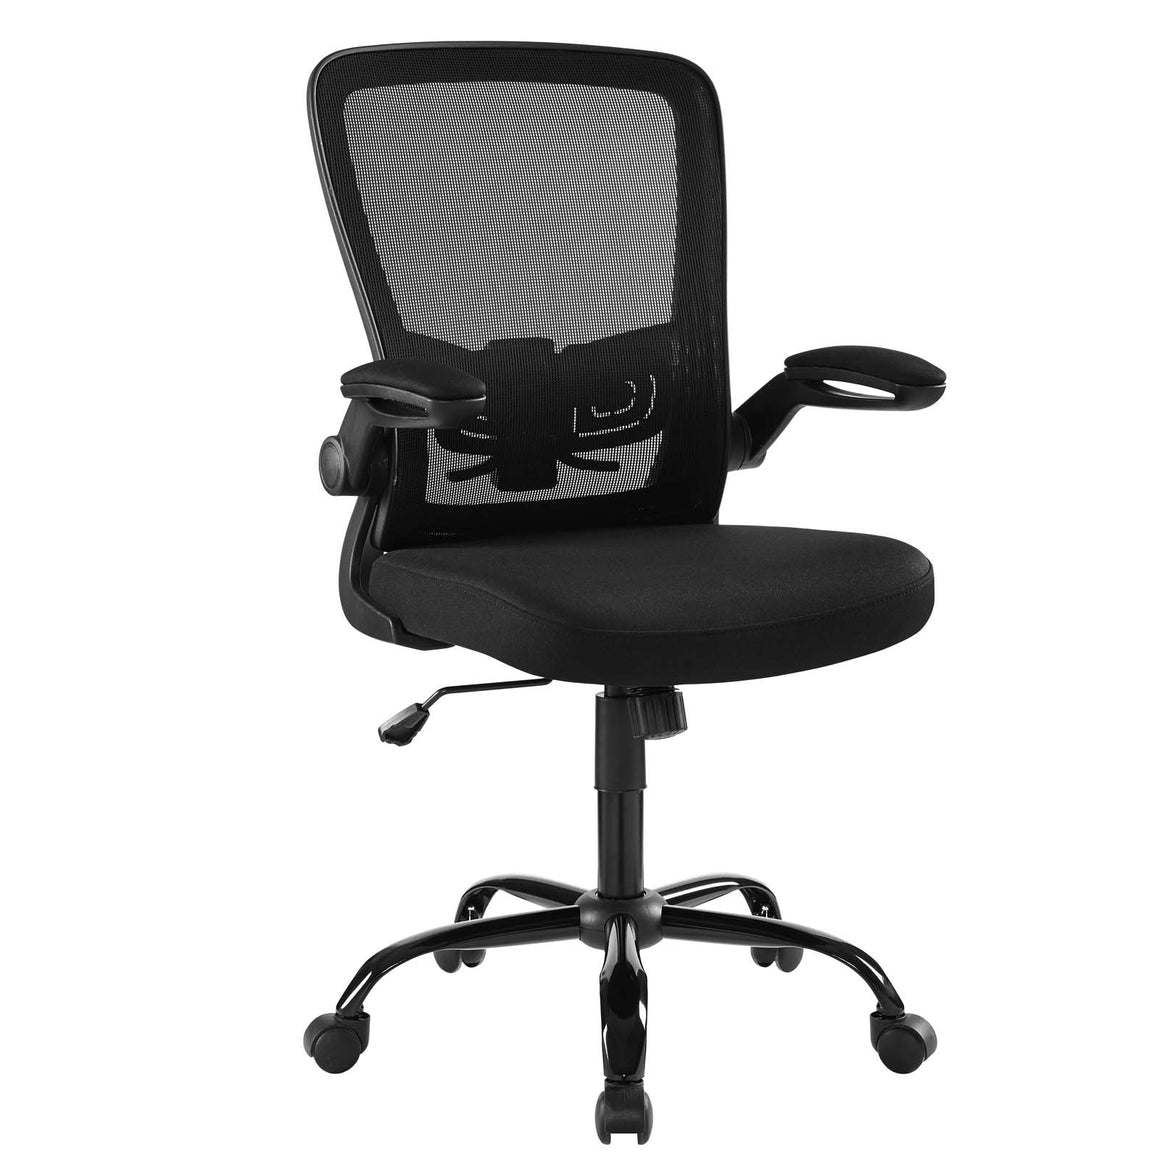 Exceed Mesh Office Chair in Black